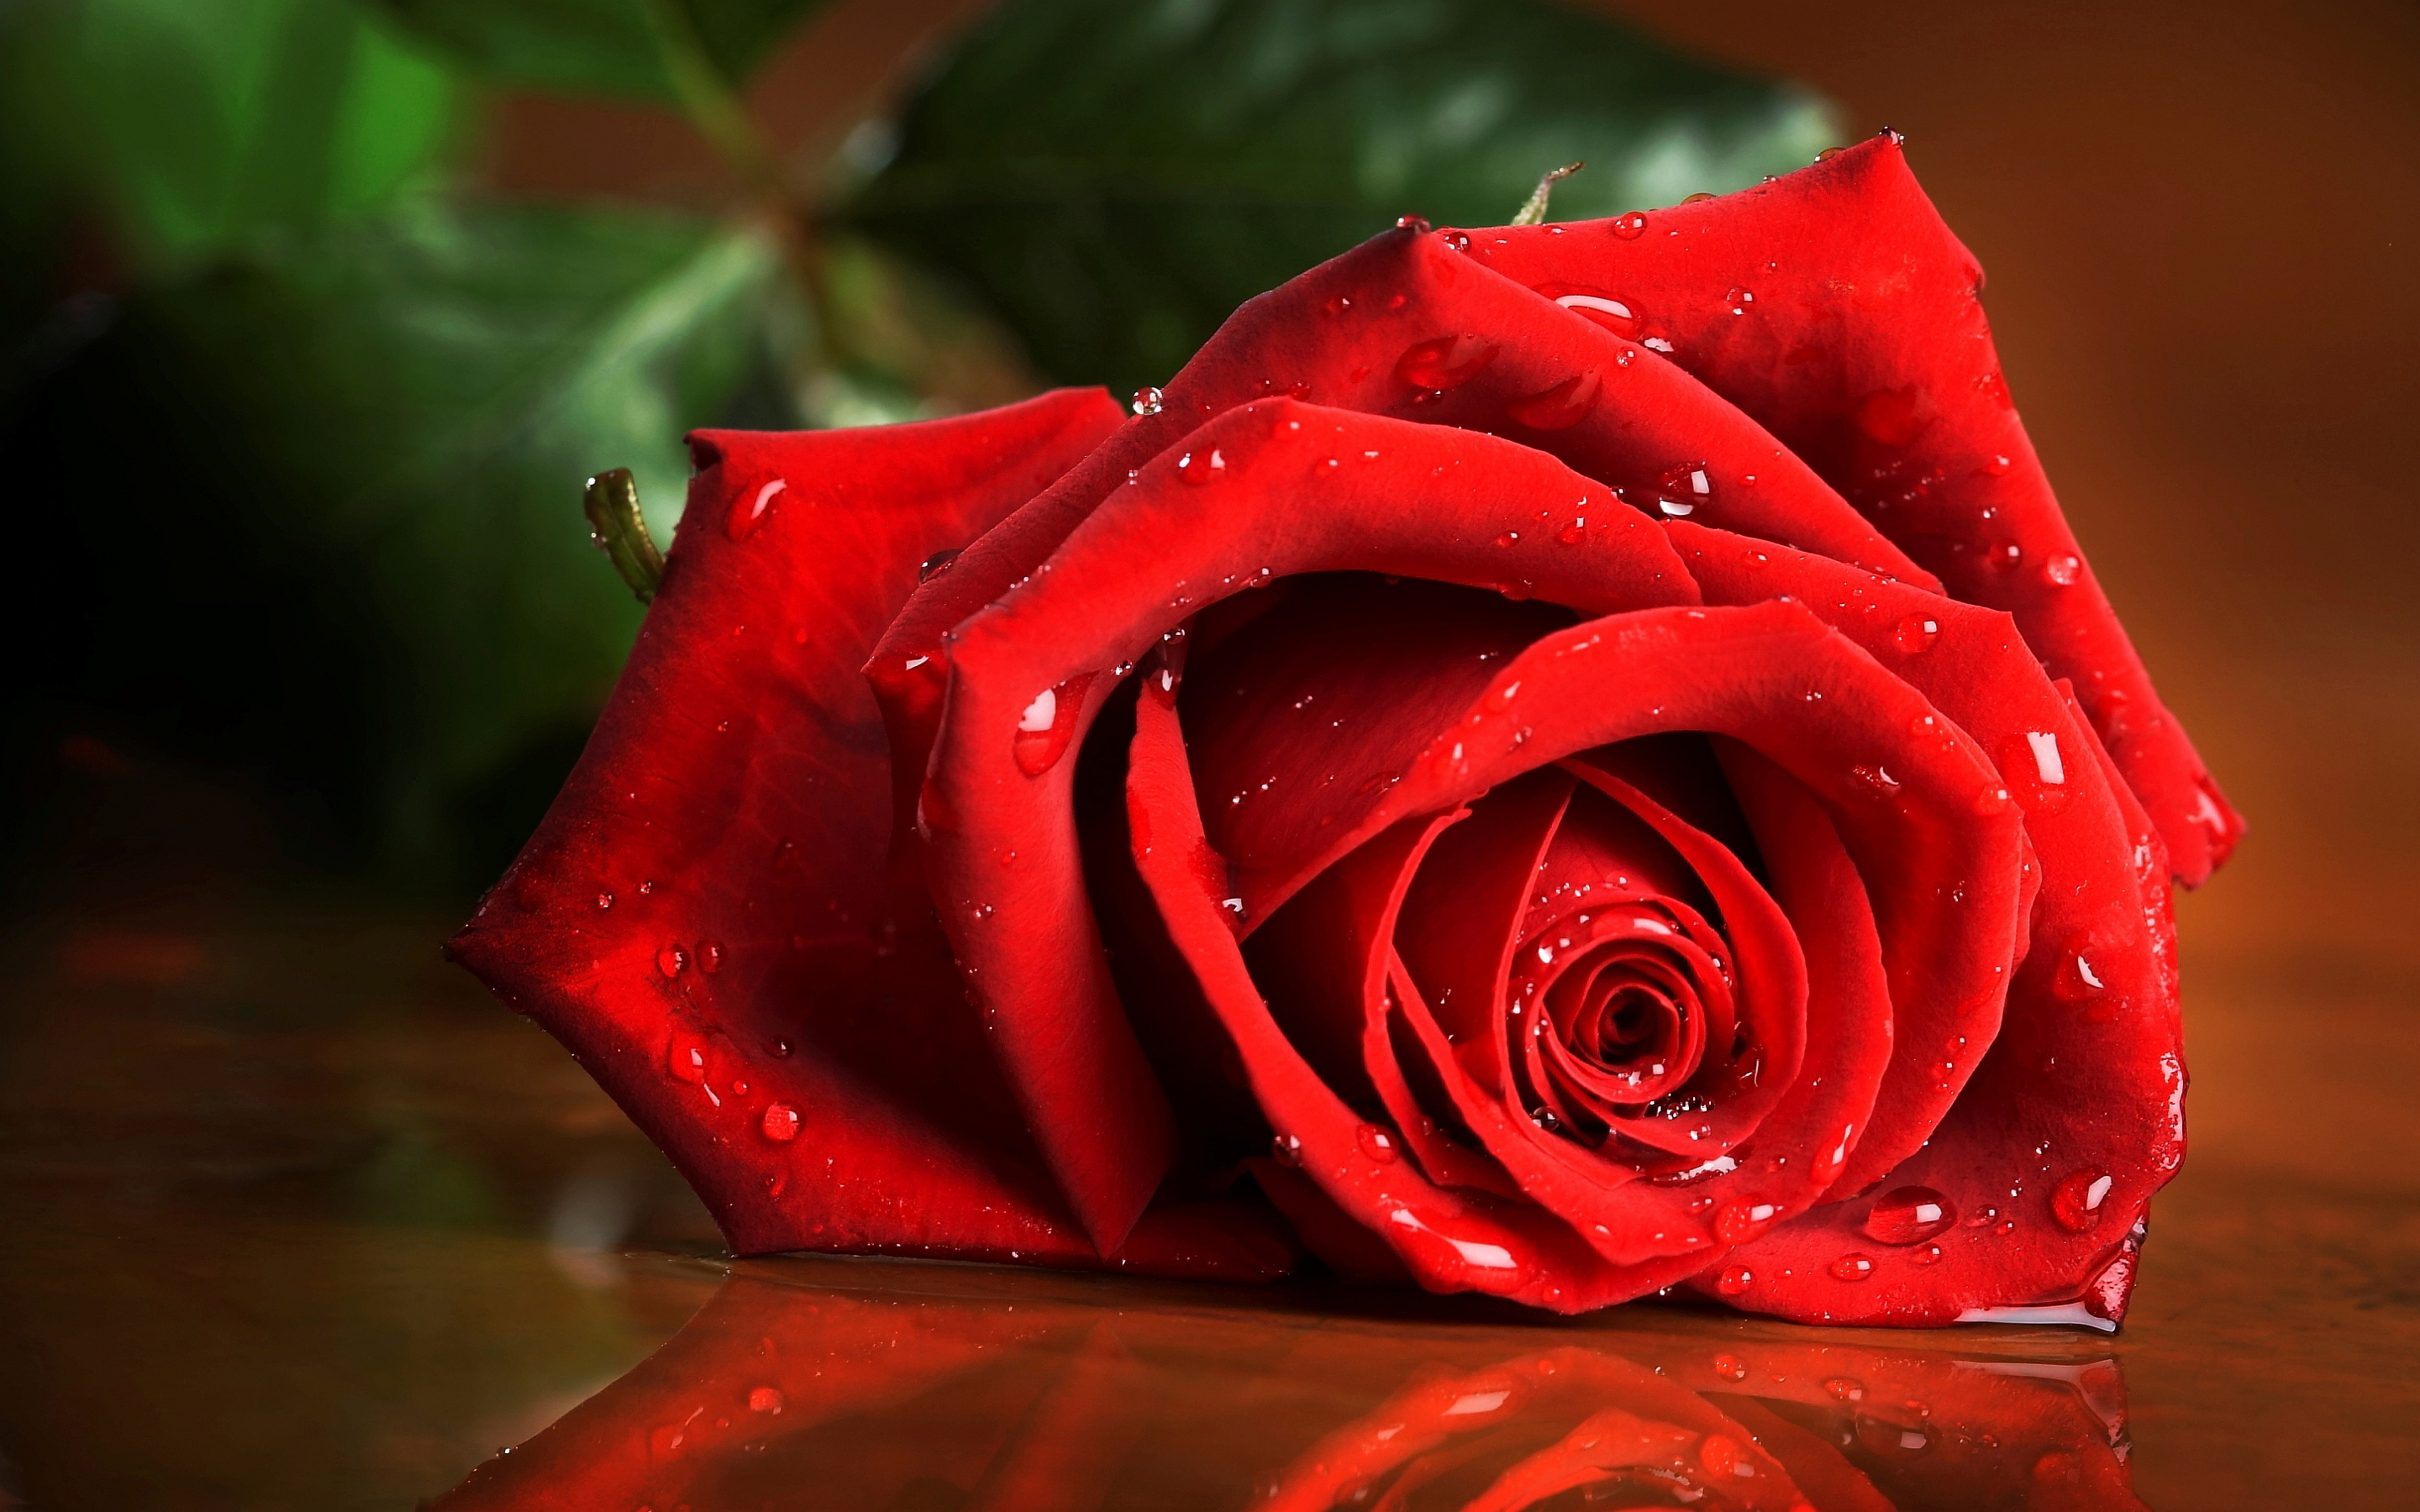 red rose live wallpaper free download,rose,garden roses,red,flower,nature